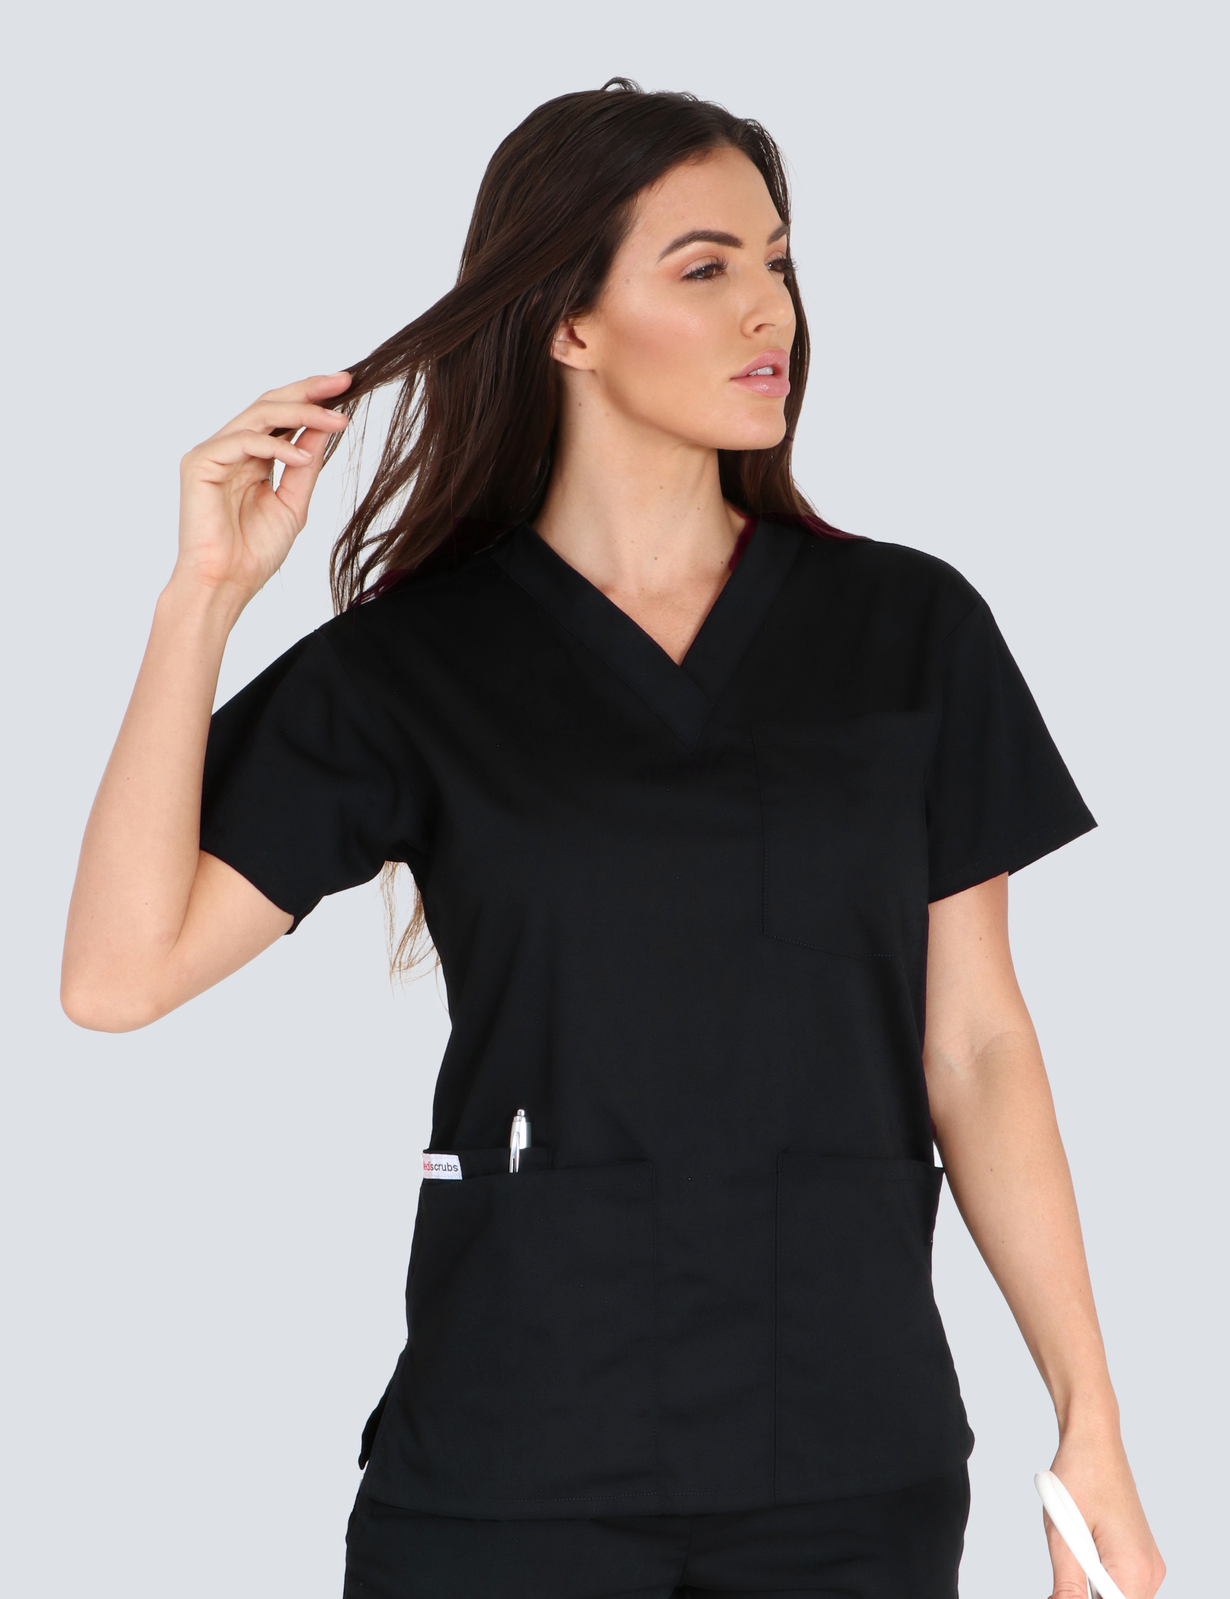 Redland Hospital - Medical Imaging (4 Pocket Scrub Top and Cargo Pants in Black incl Logos)